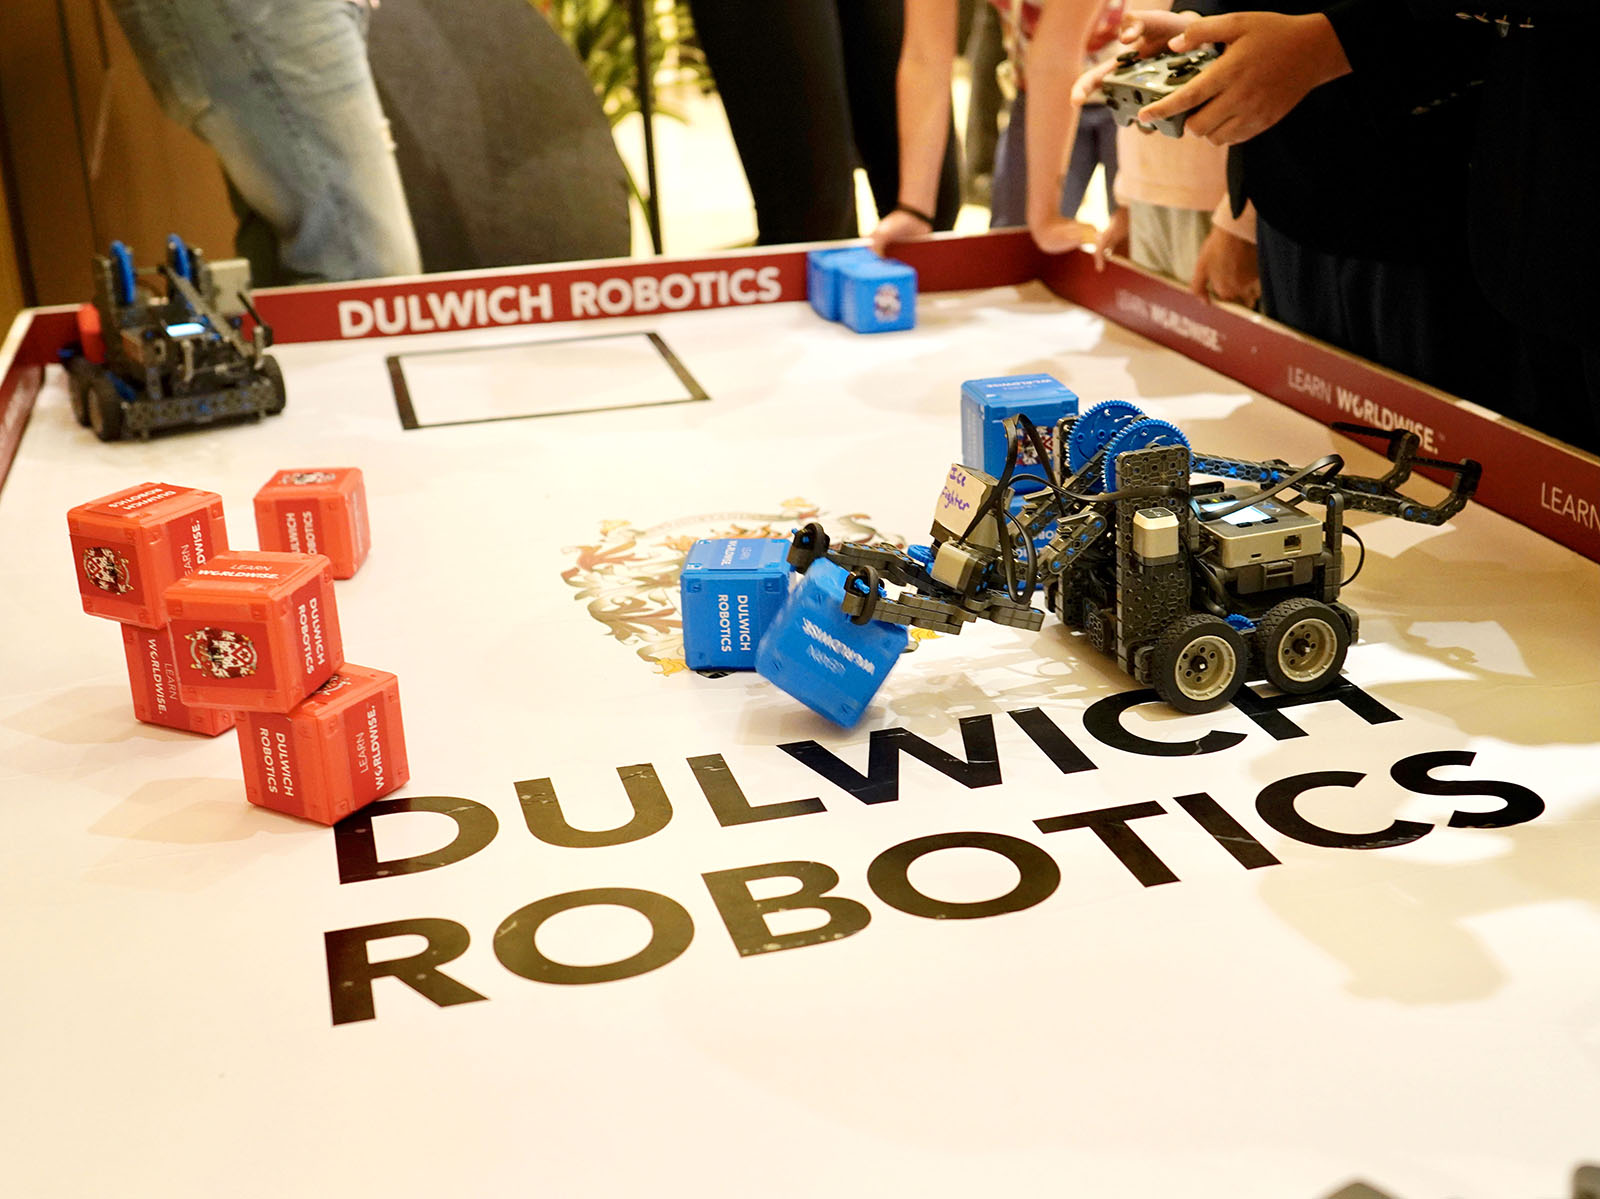 Dulwich Robotics